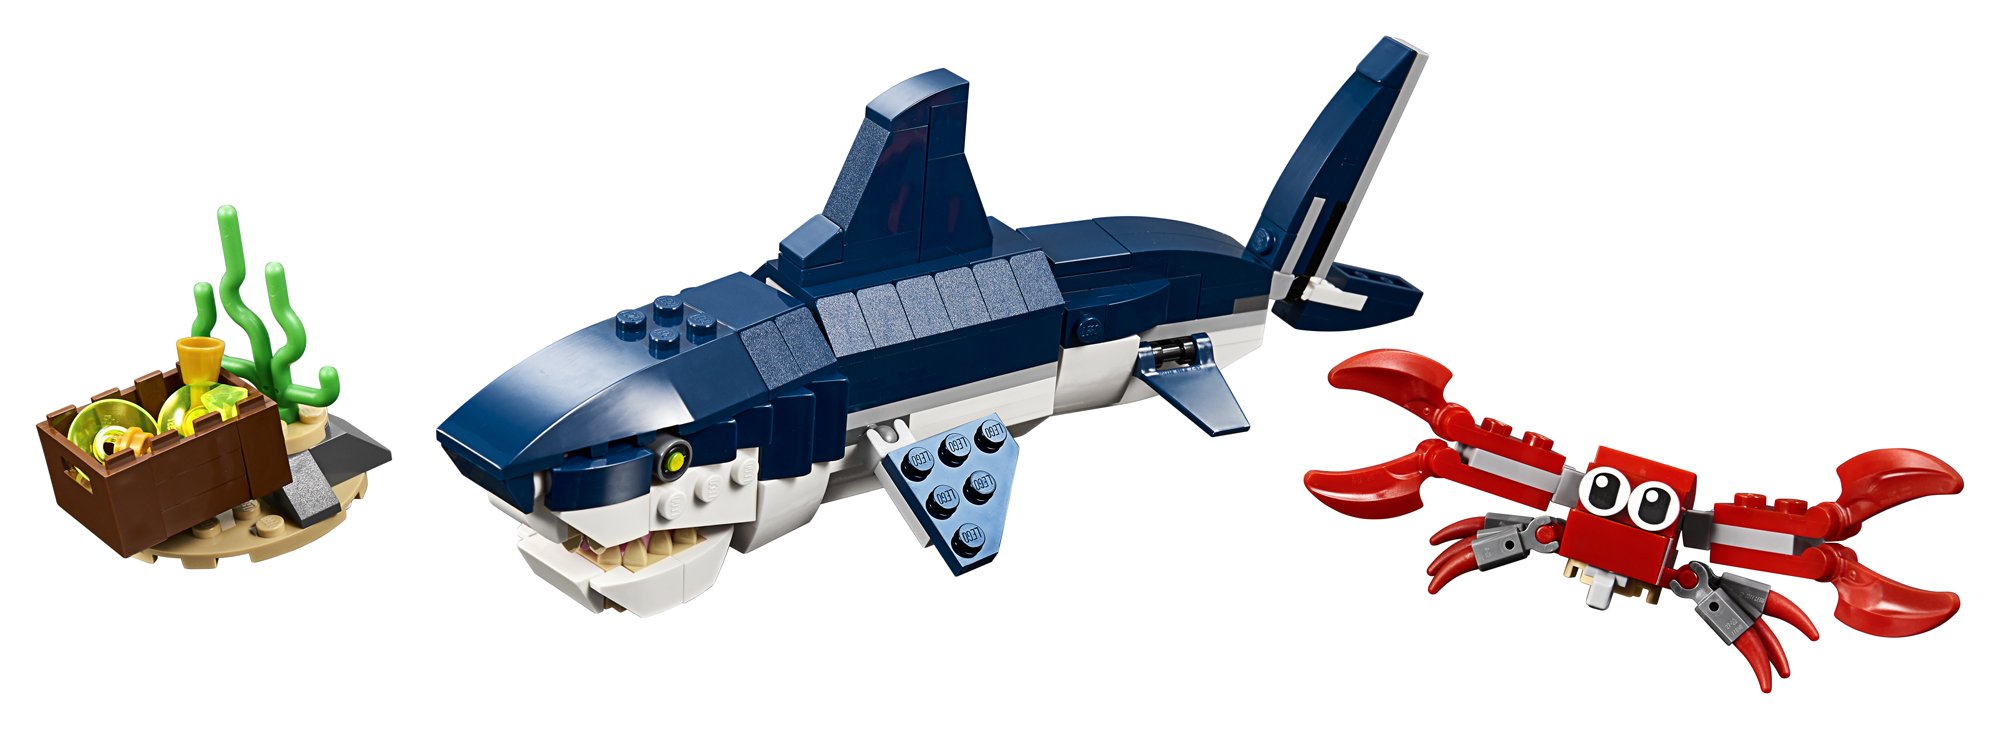 LEGO 樂高積木 Creator系列 31088 深海生物